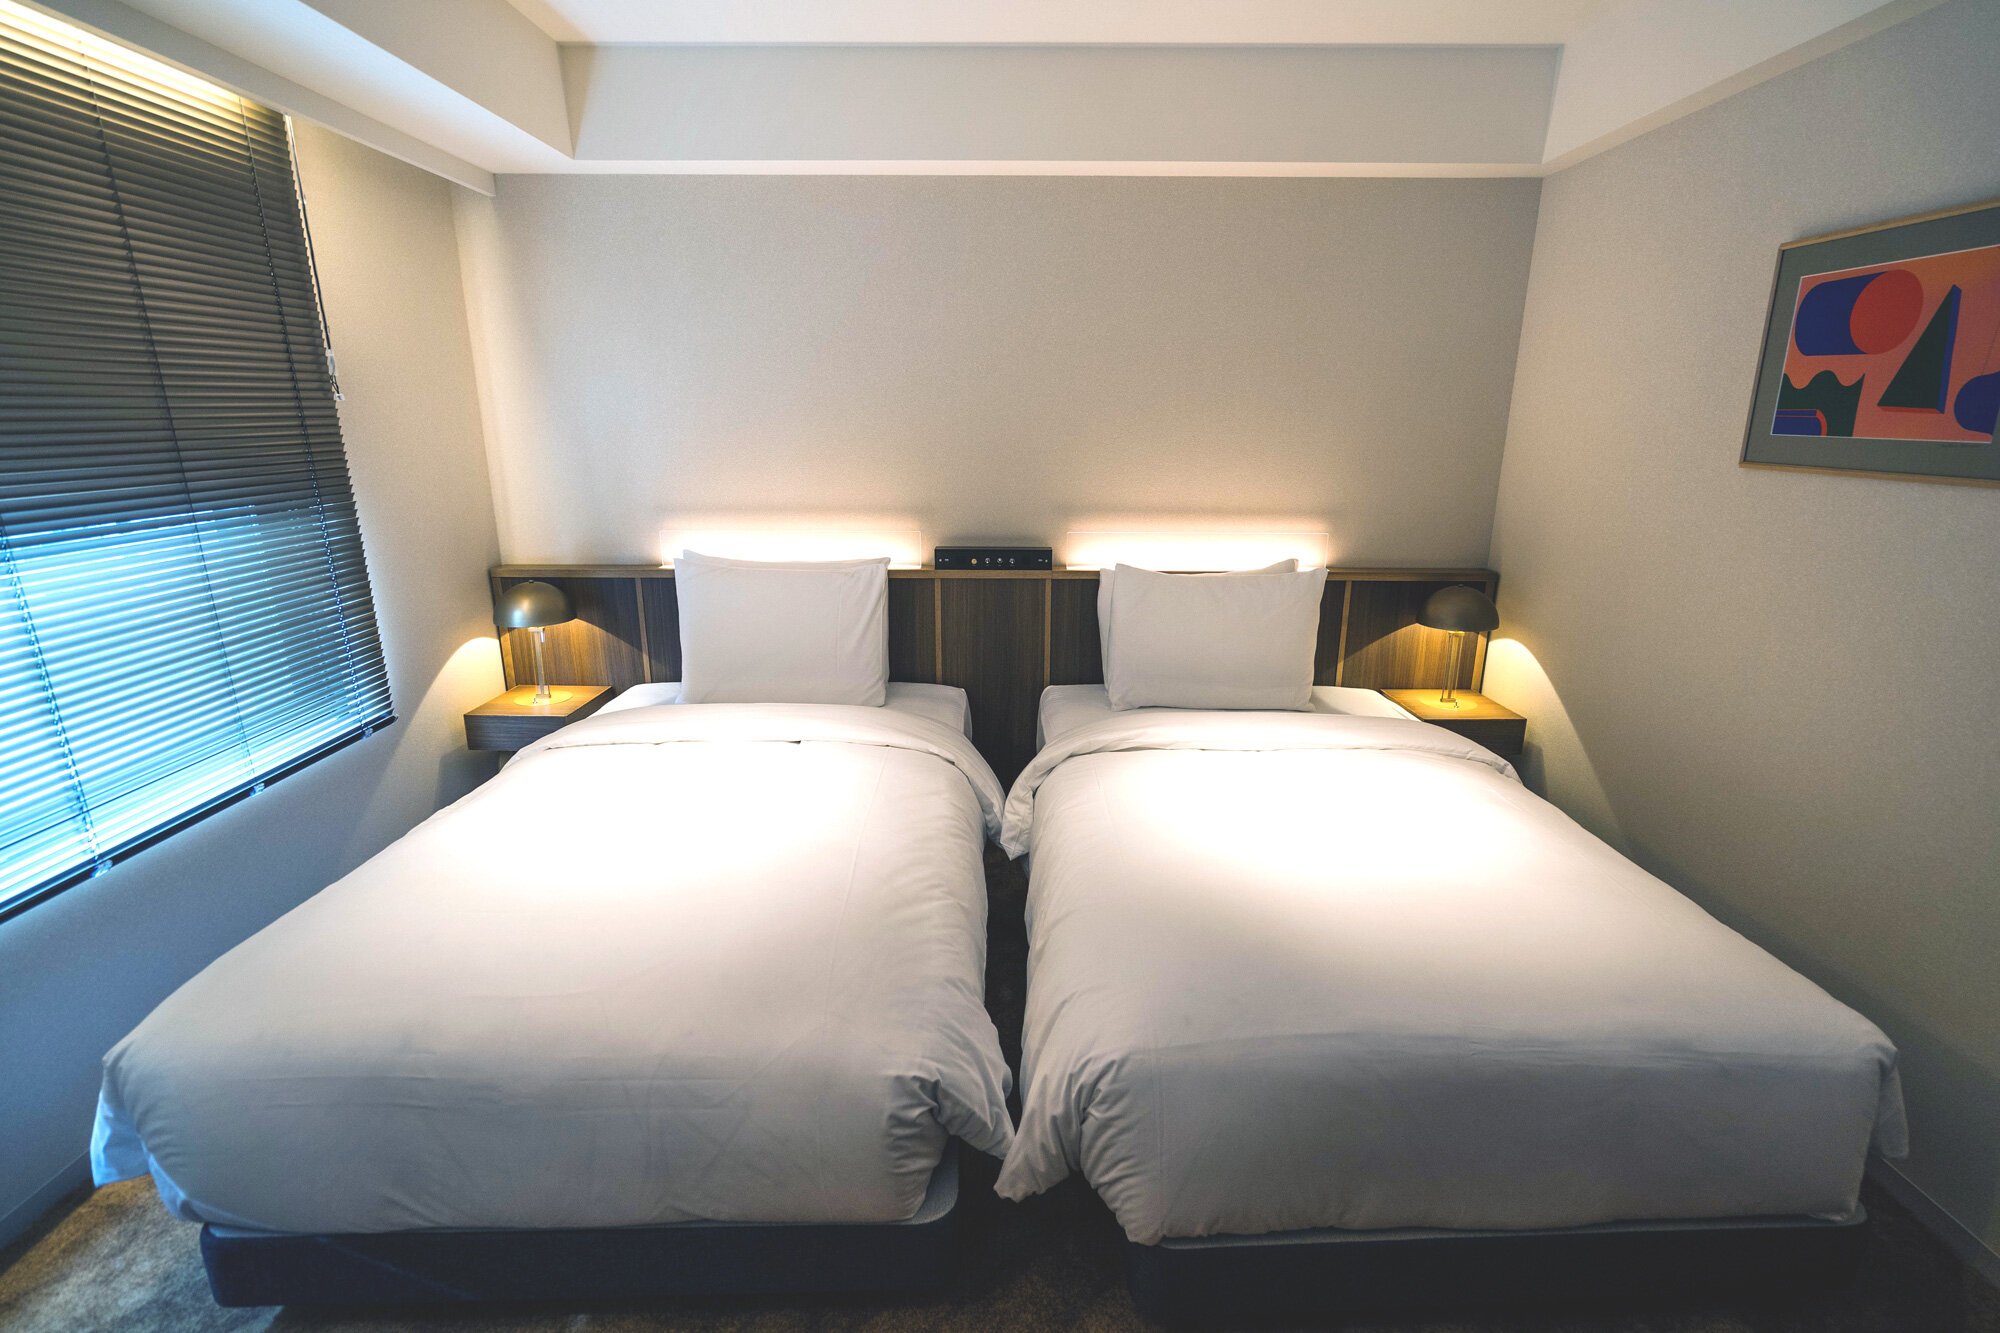 Deluxe Twin room beds